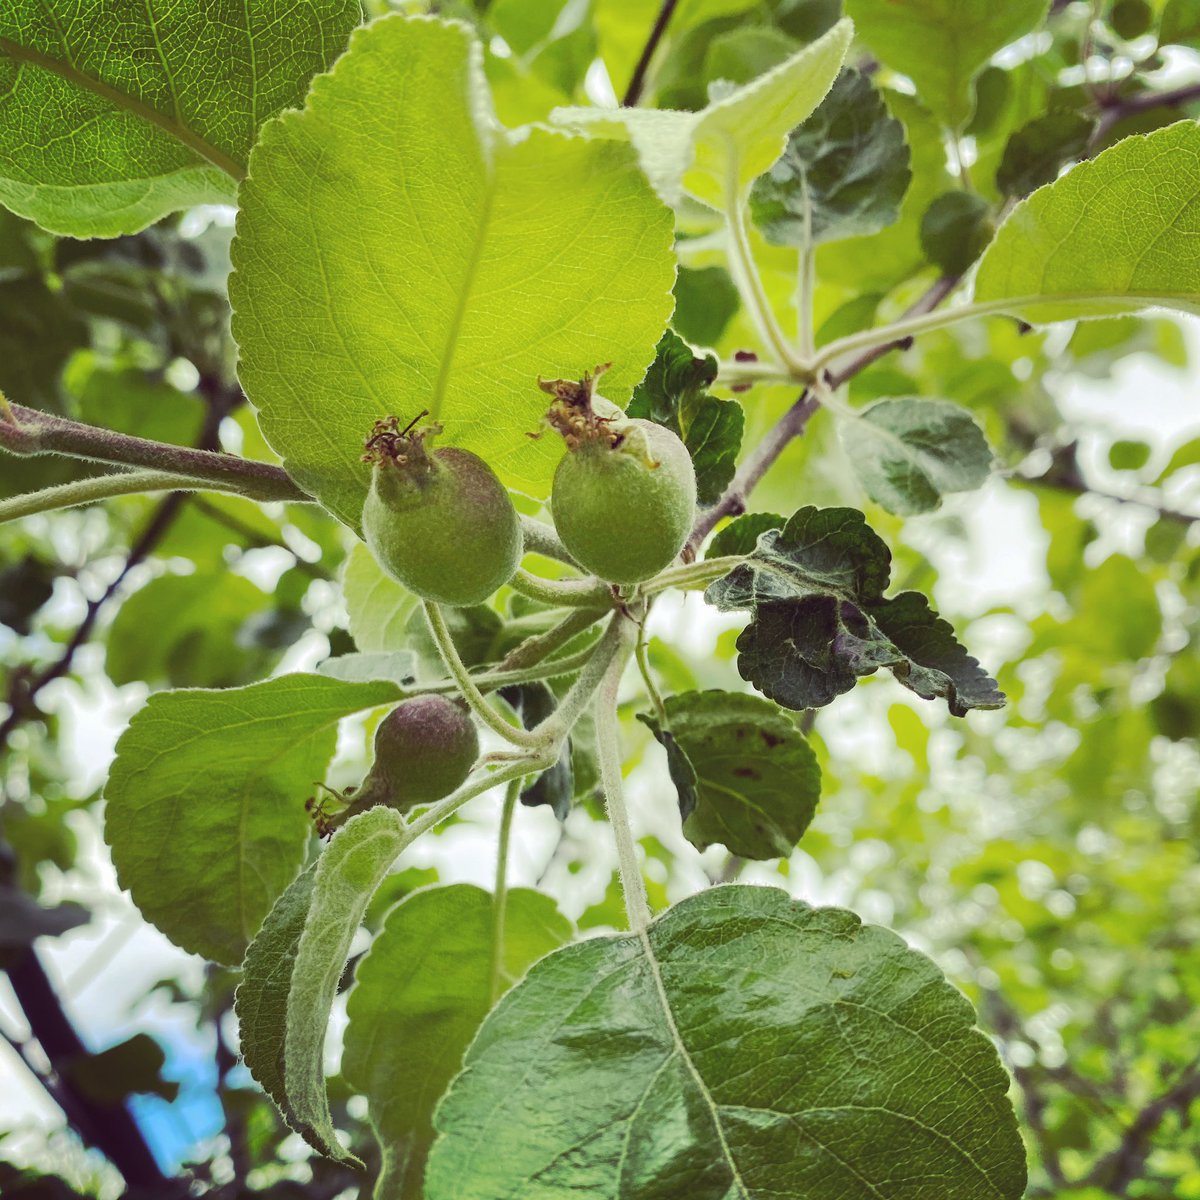 Grow, grow little #apples. #ciderinprogress #applegrowing #appletree #cider